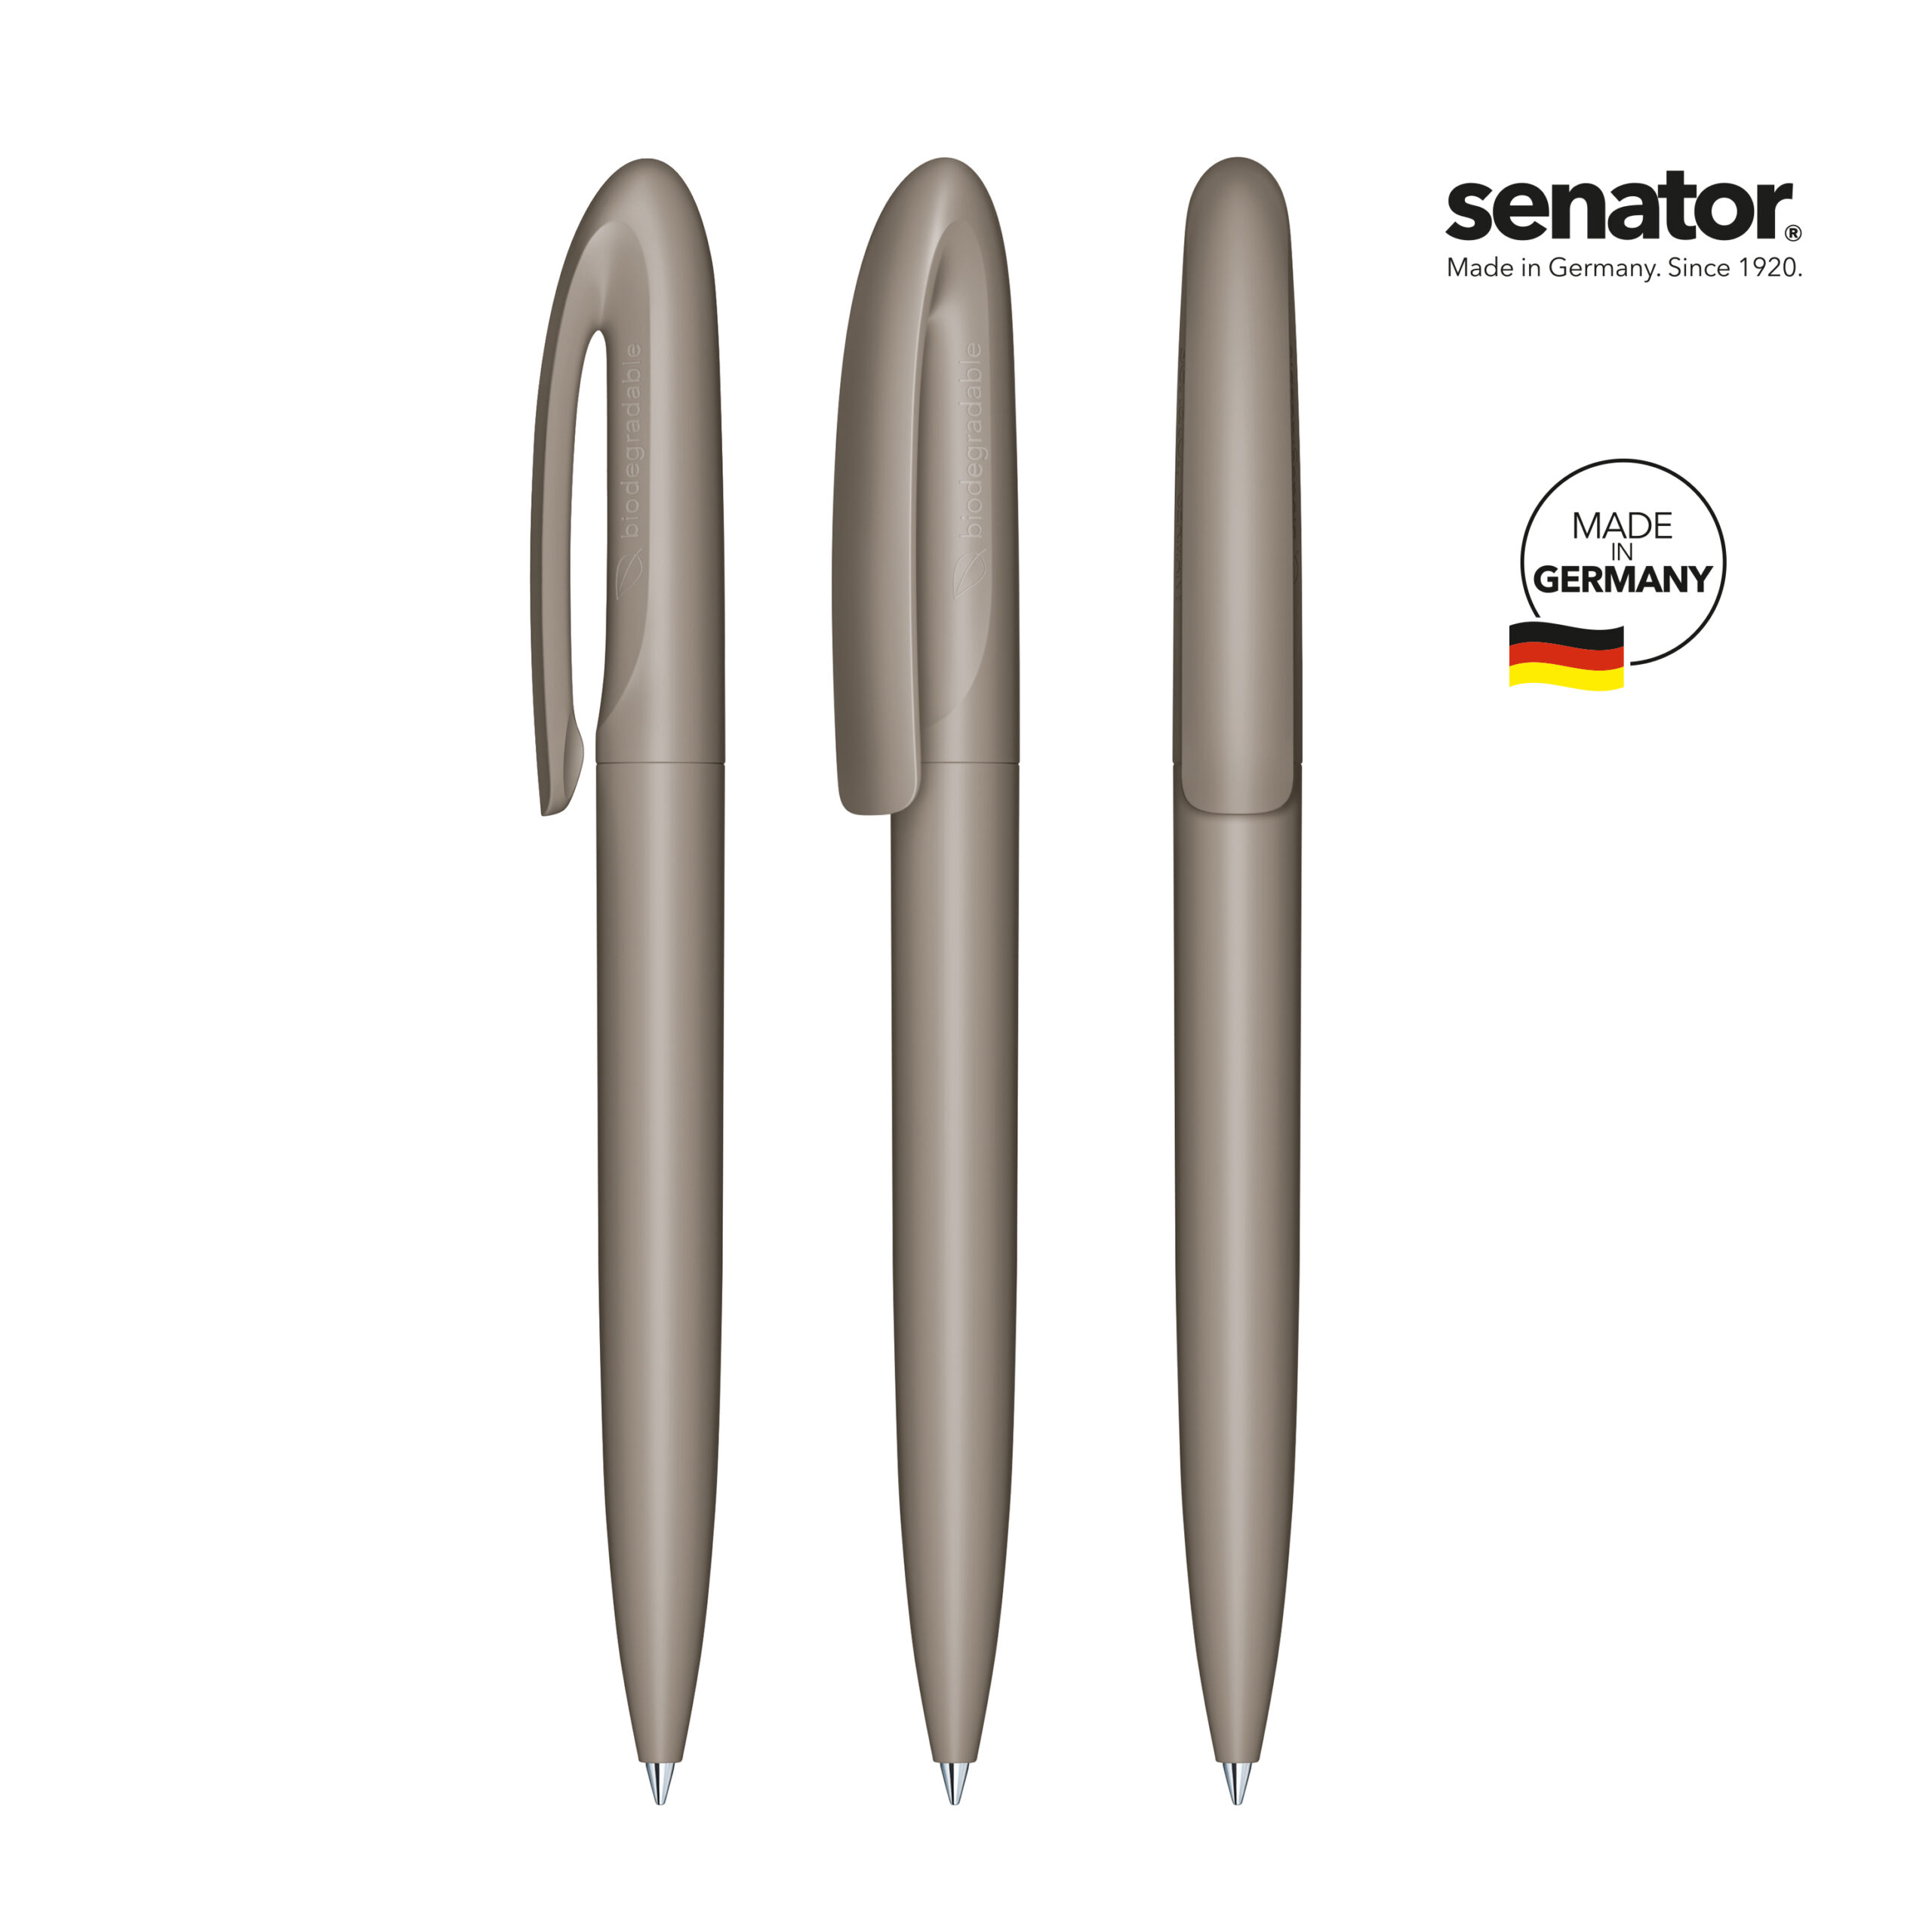 3290-senator-skeye-bio-matt-pms-warmgray10-5-p